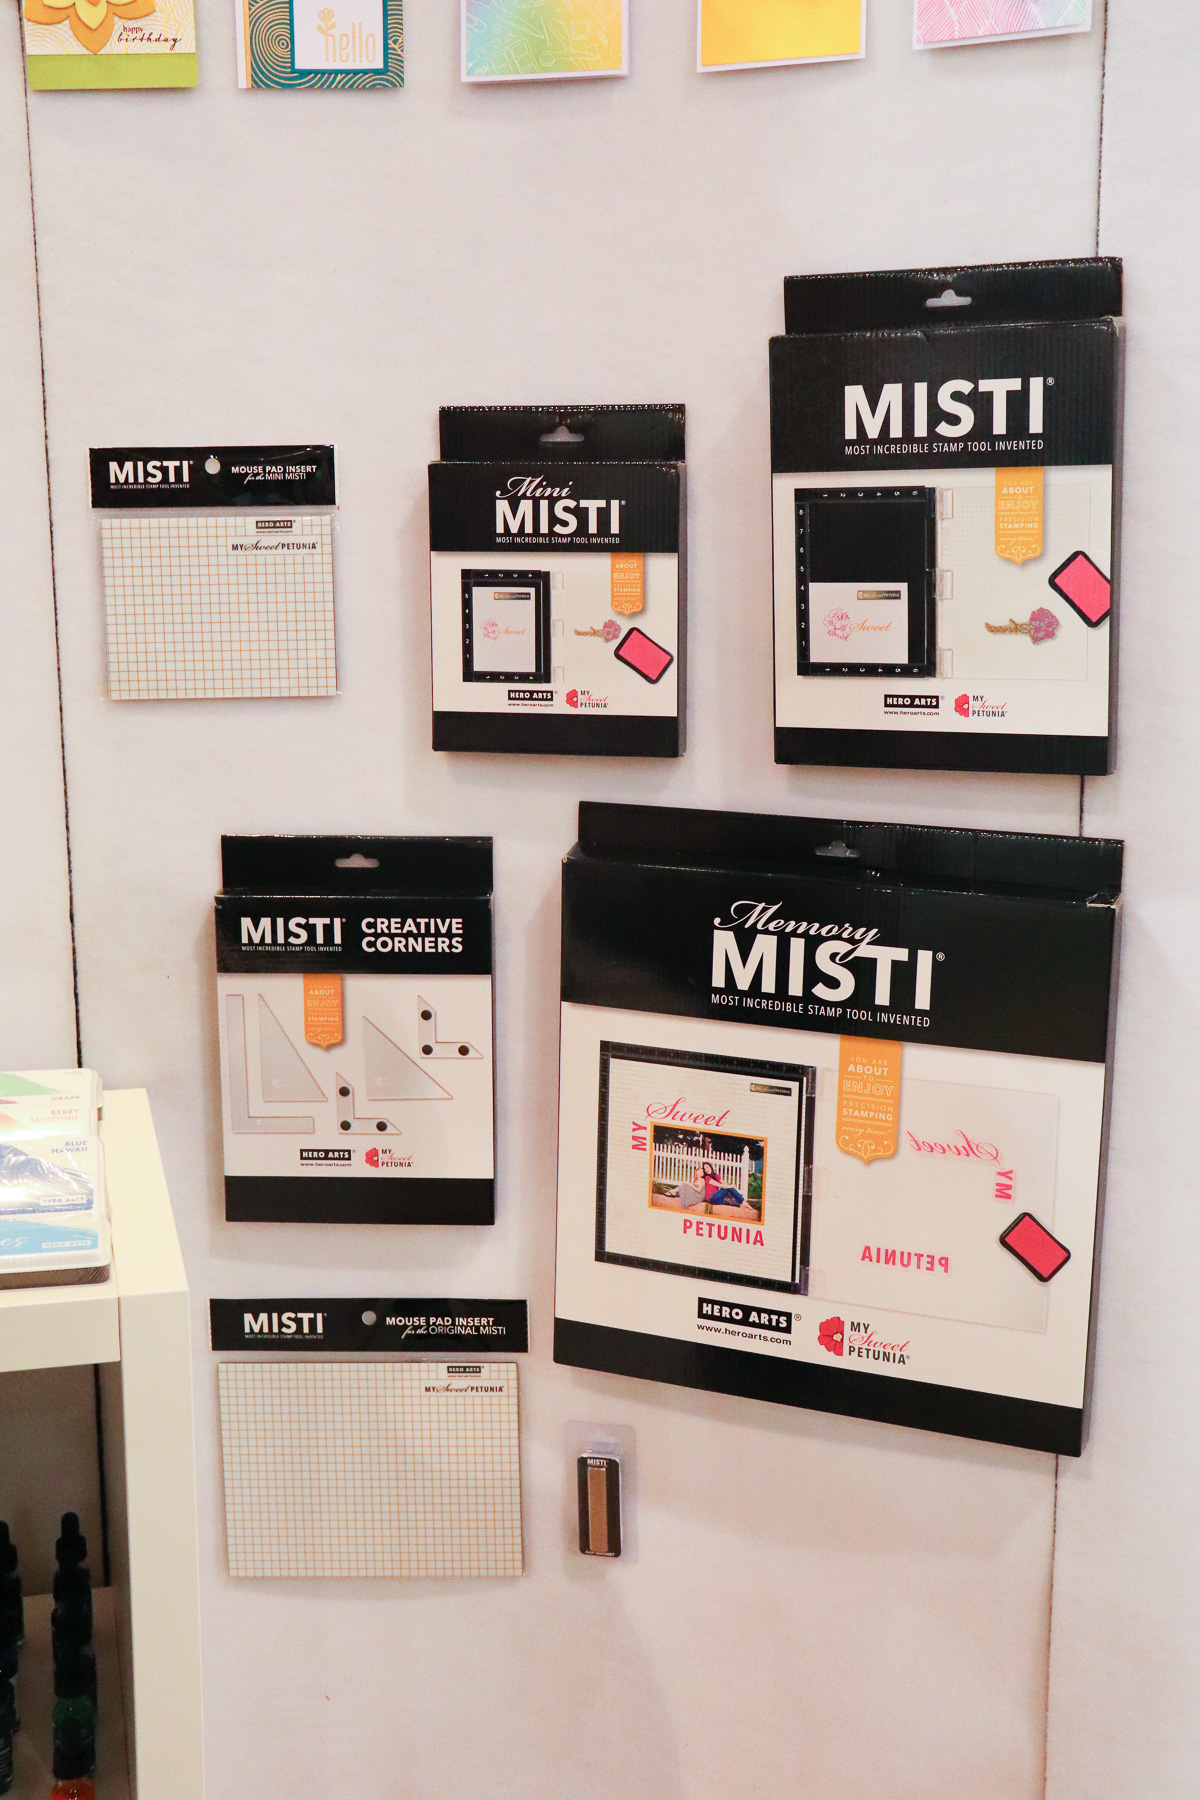 MINI MISTI Stamp Positioner (2020 Version)